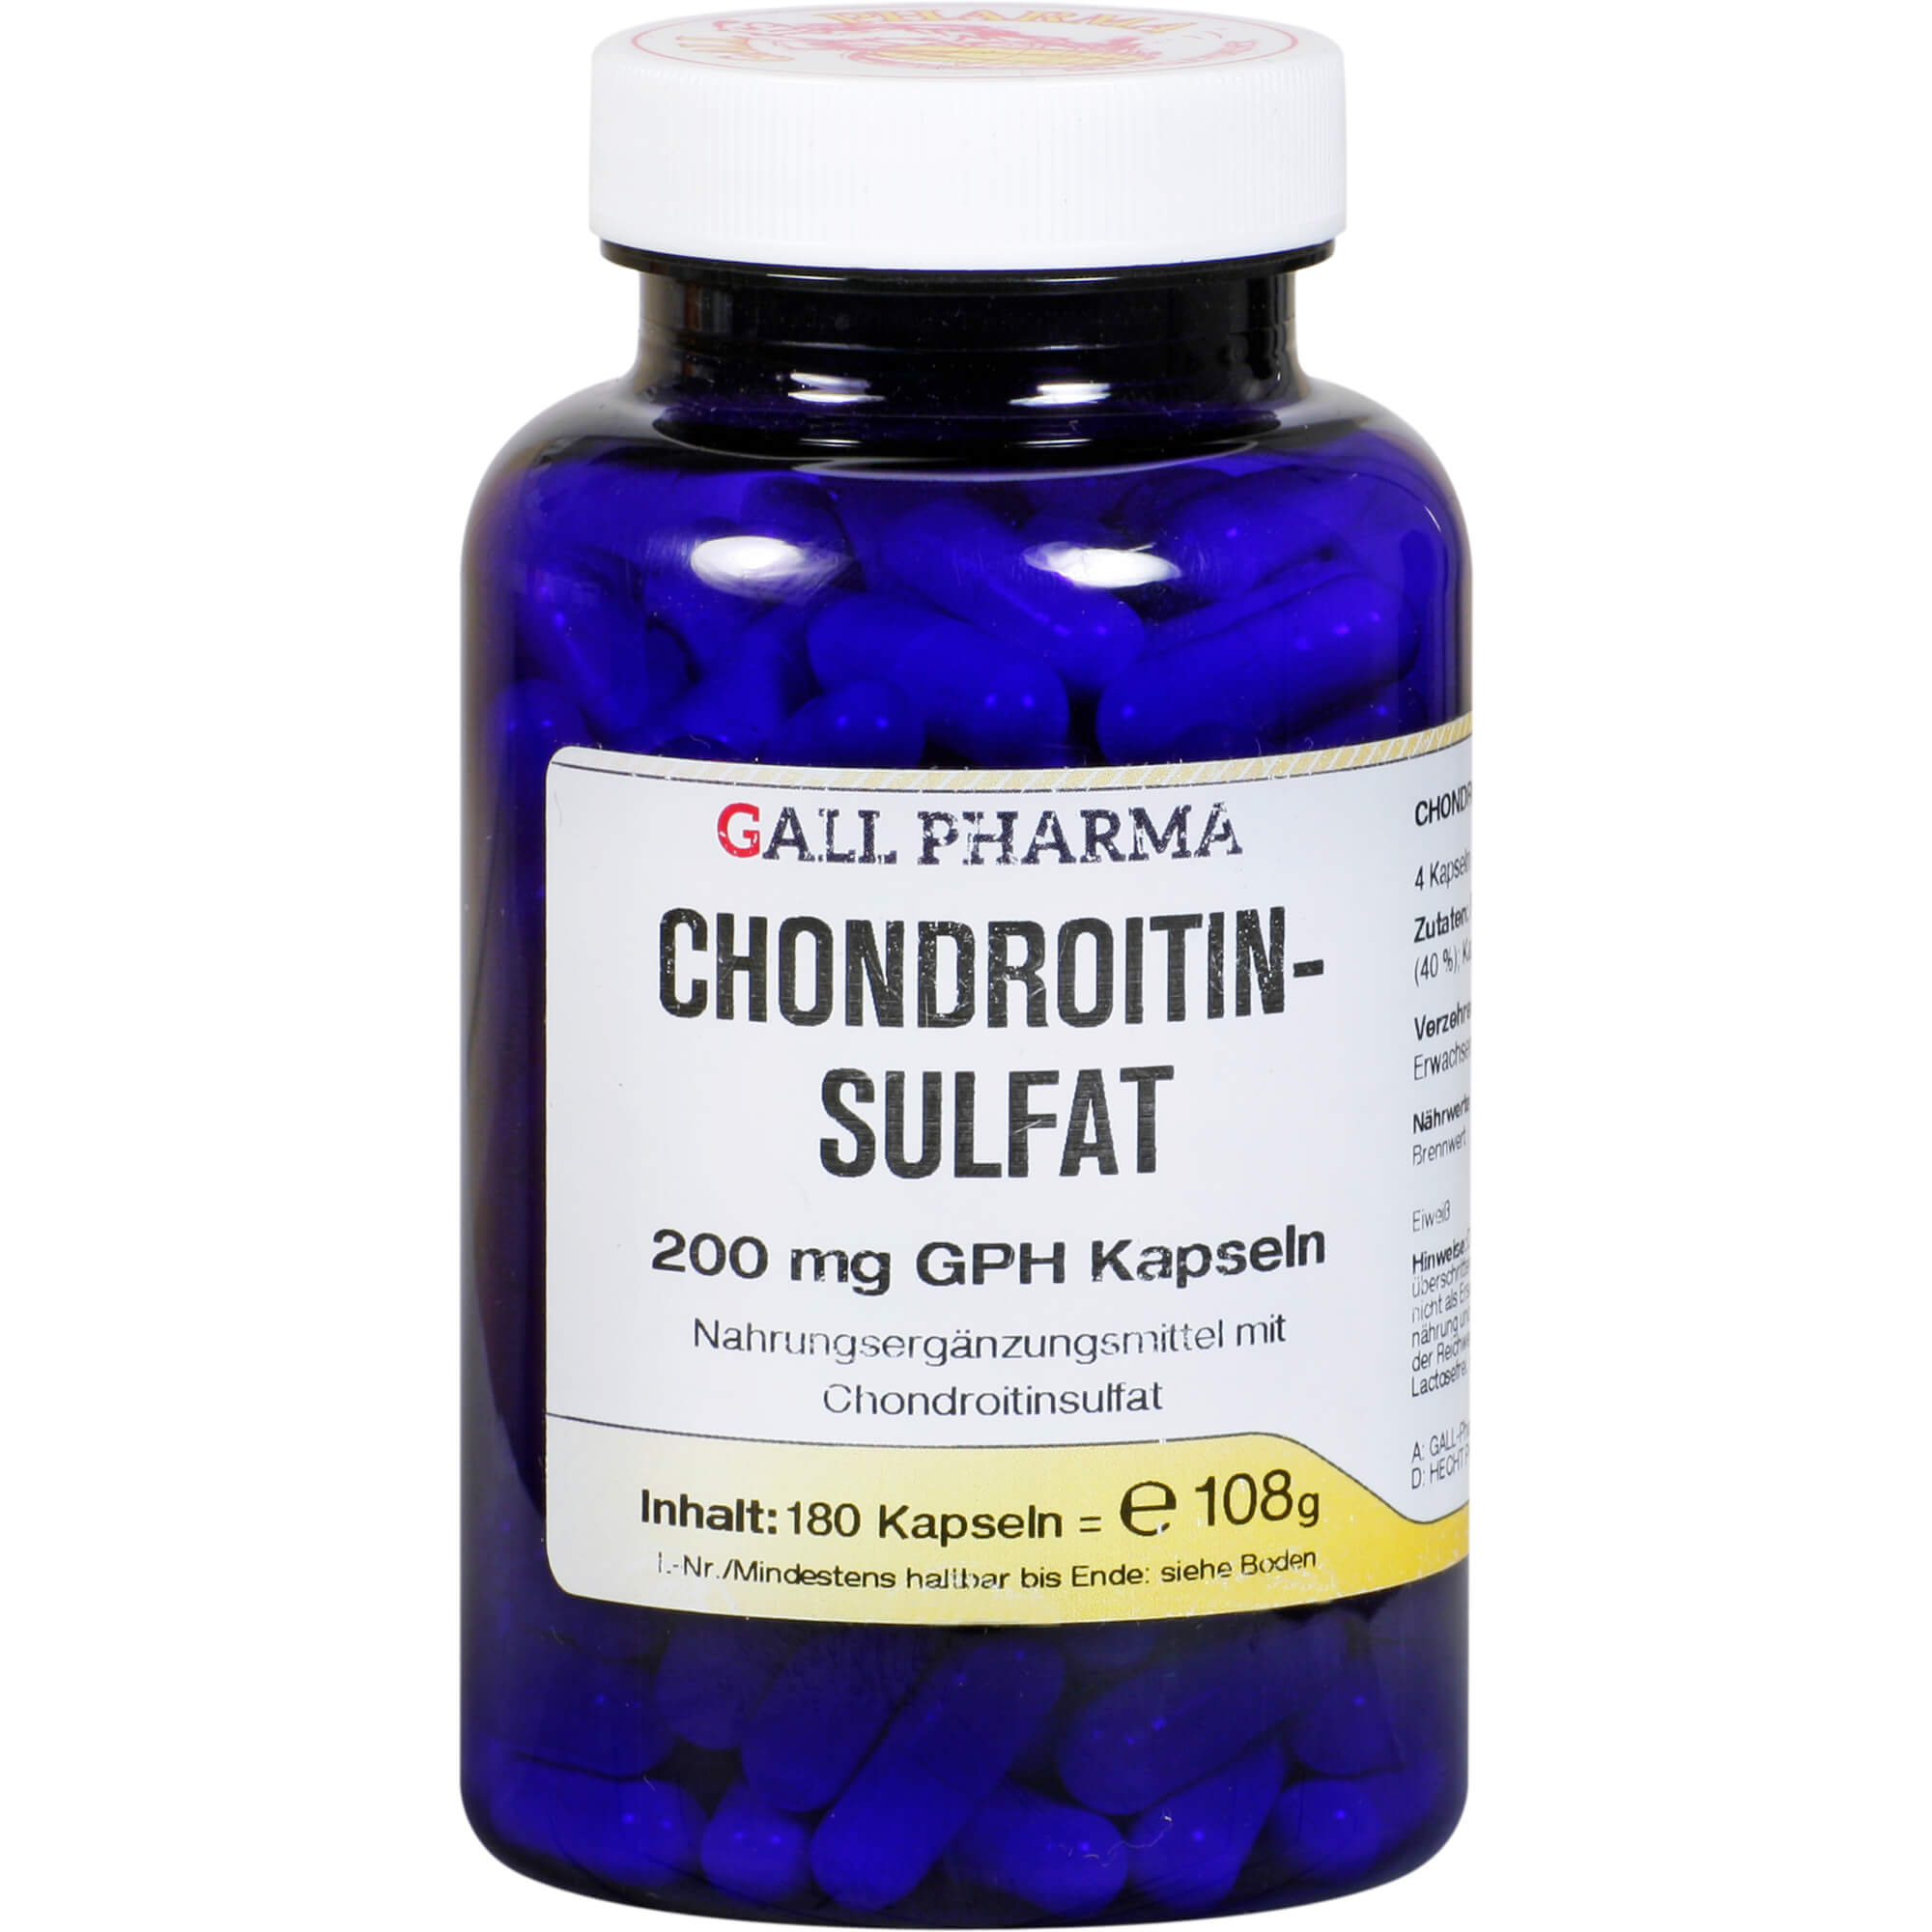 Nahrungsergänzungsmittel mit Chondroitinsulfat.